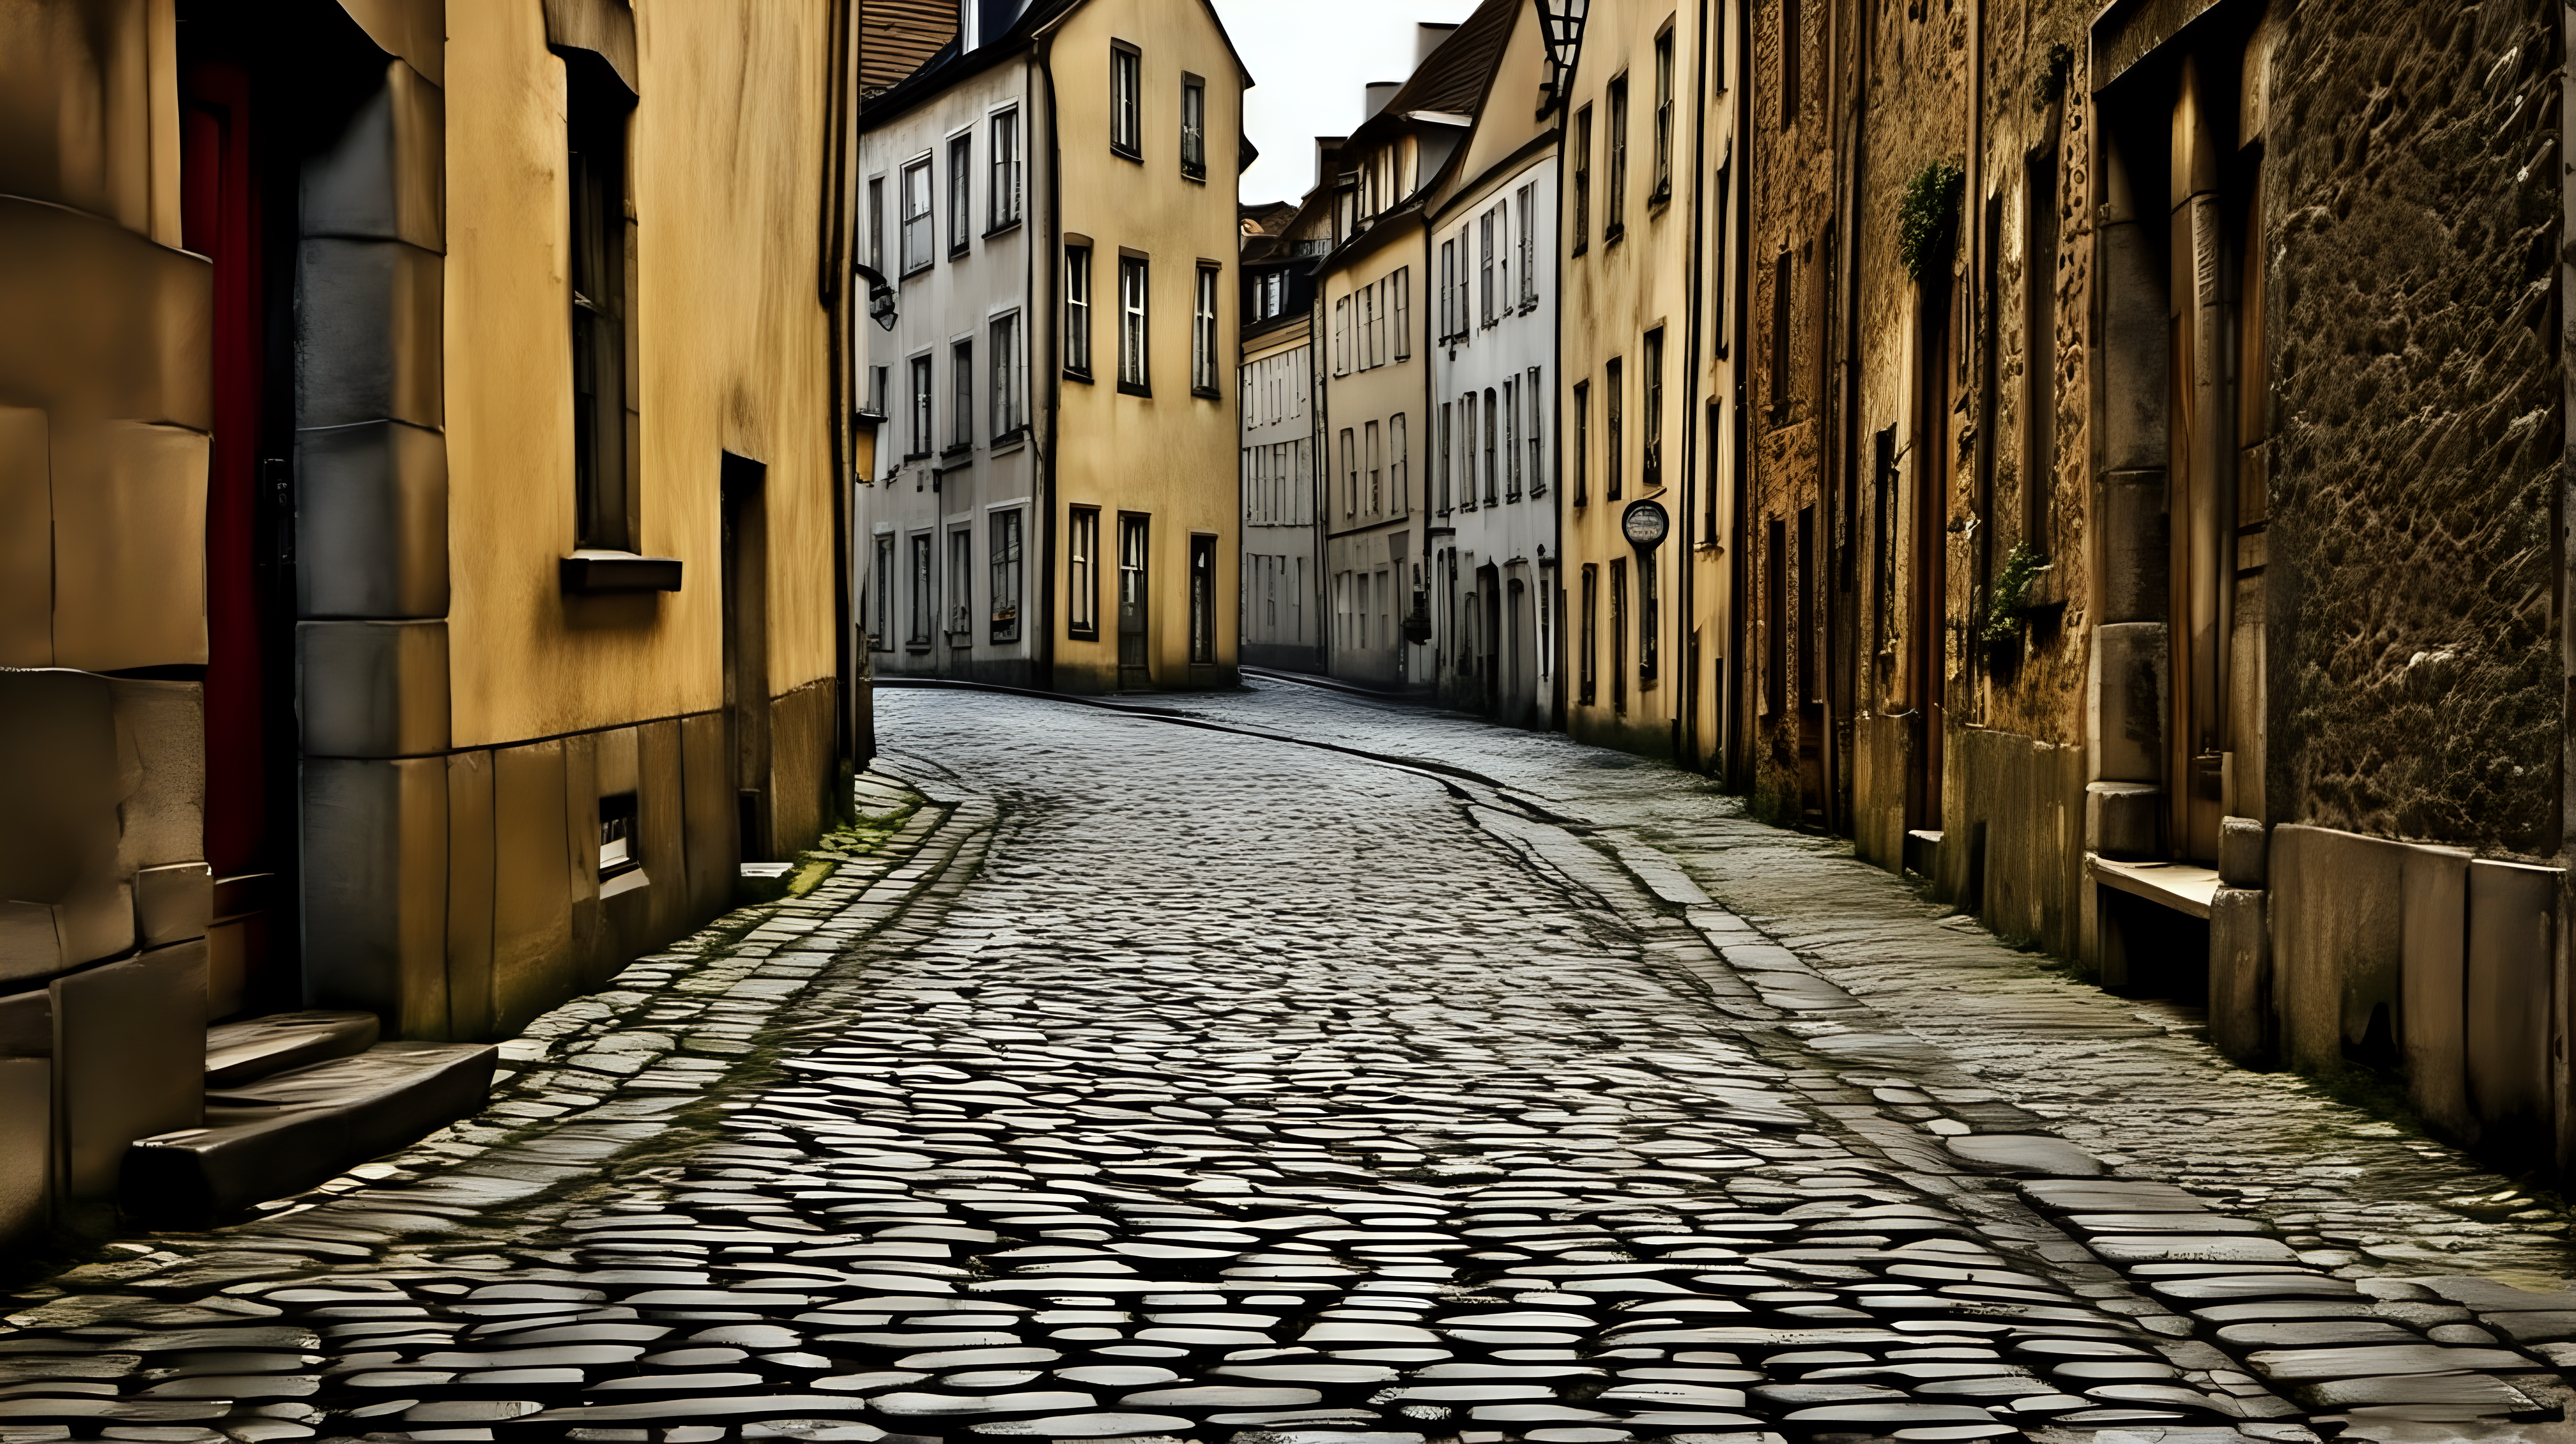 An aged cobblestone street in an old European